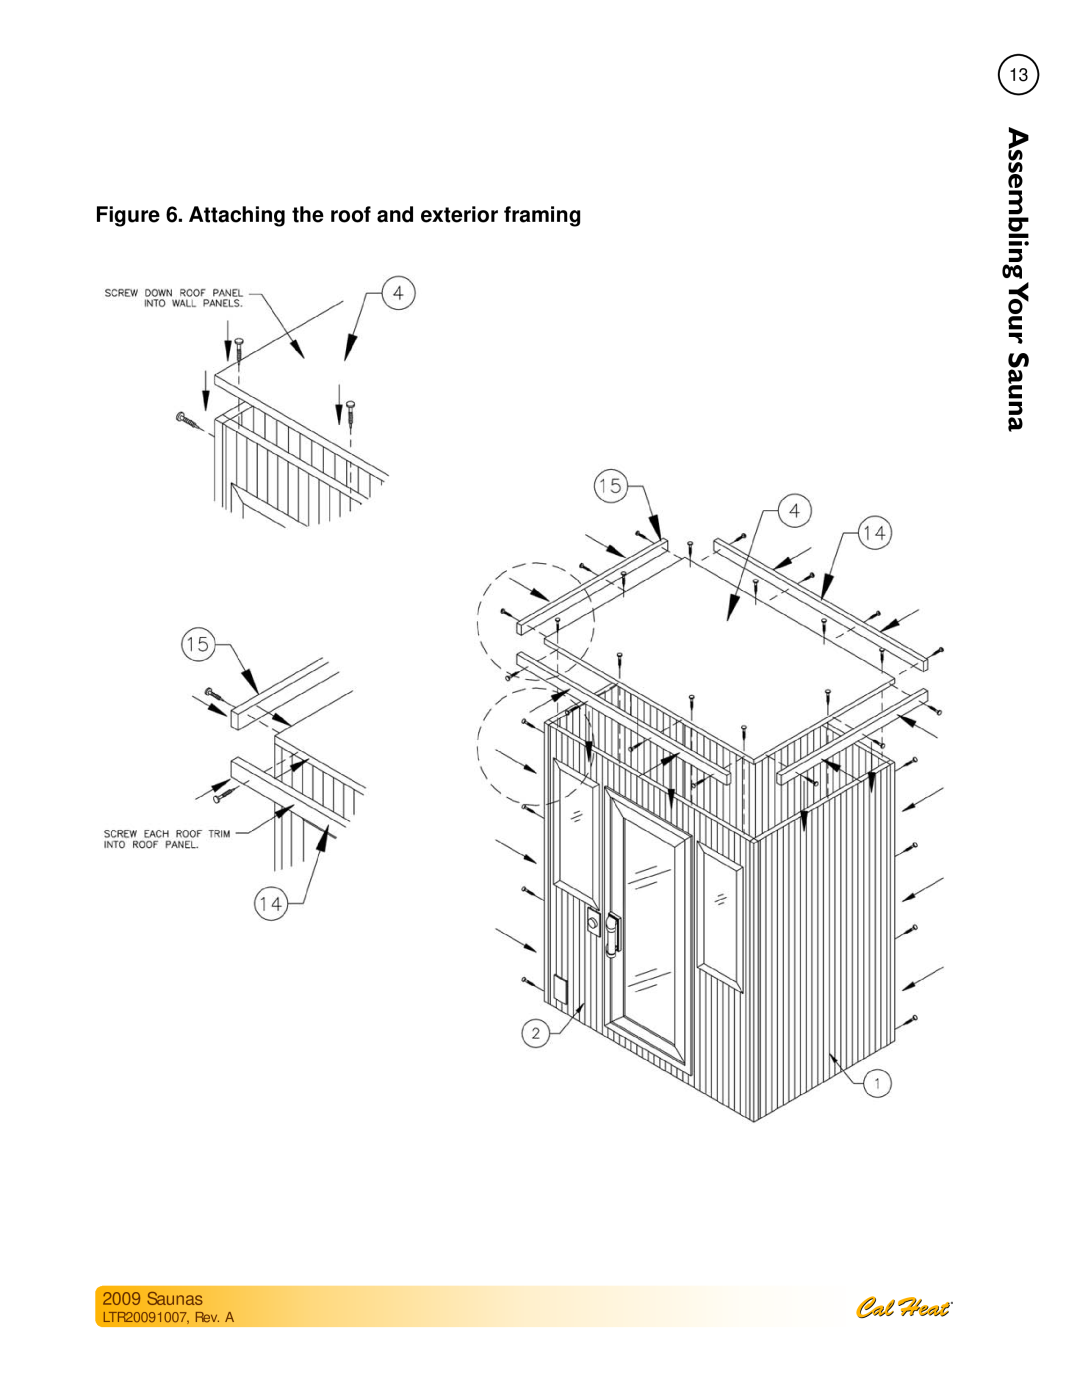 Cal Spas Saunas manual Attaching the roof and exterior framing, LTR20091007, Rev. A, AssemblingYour 